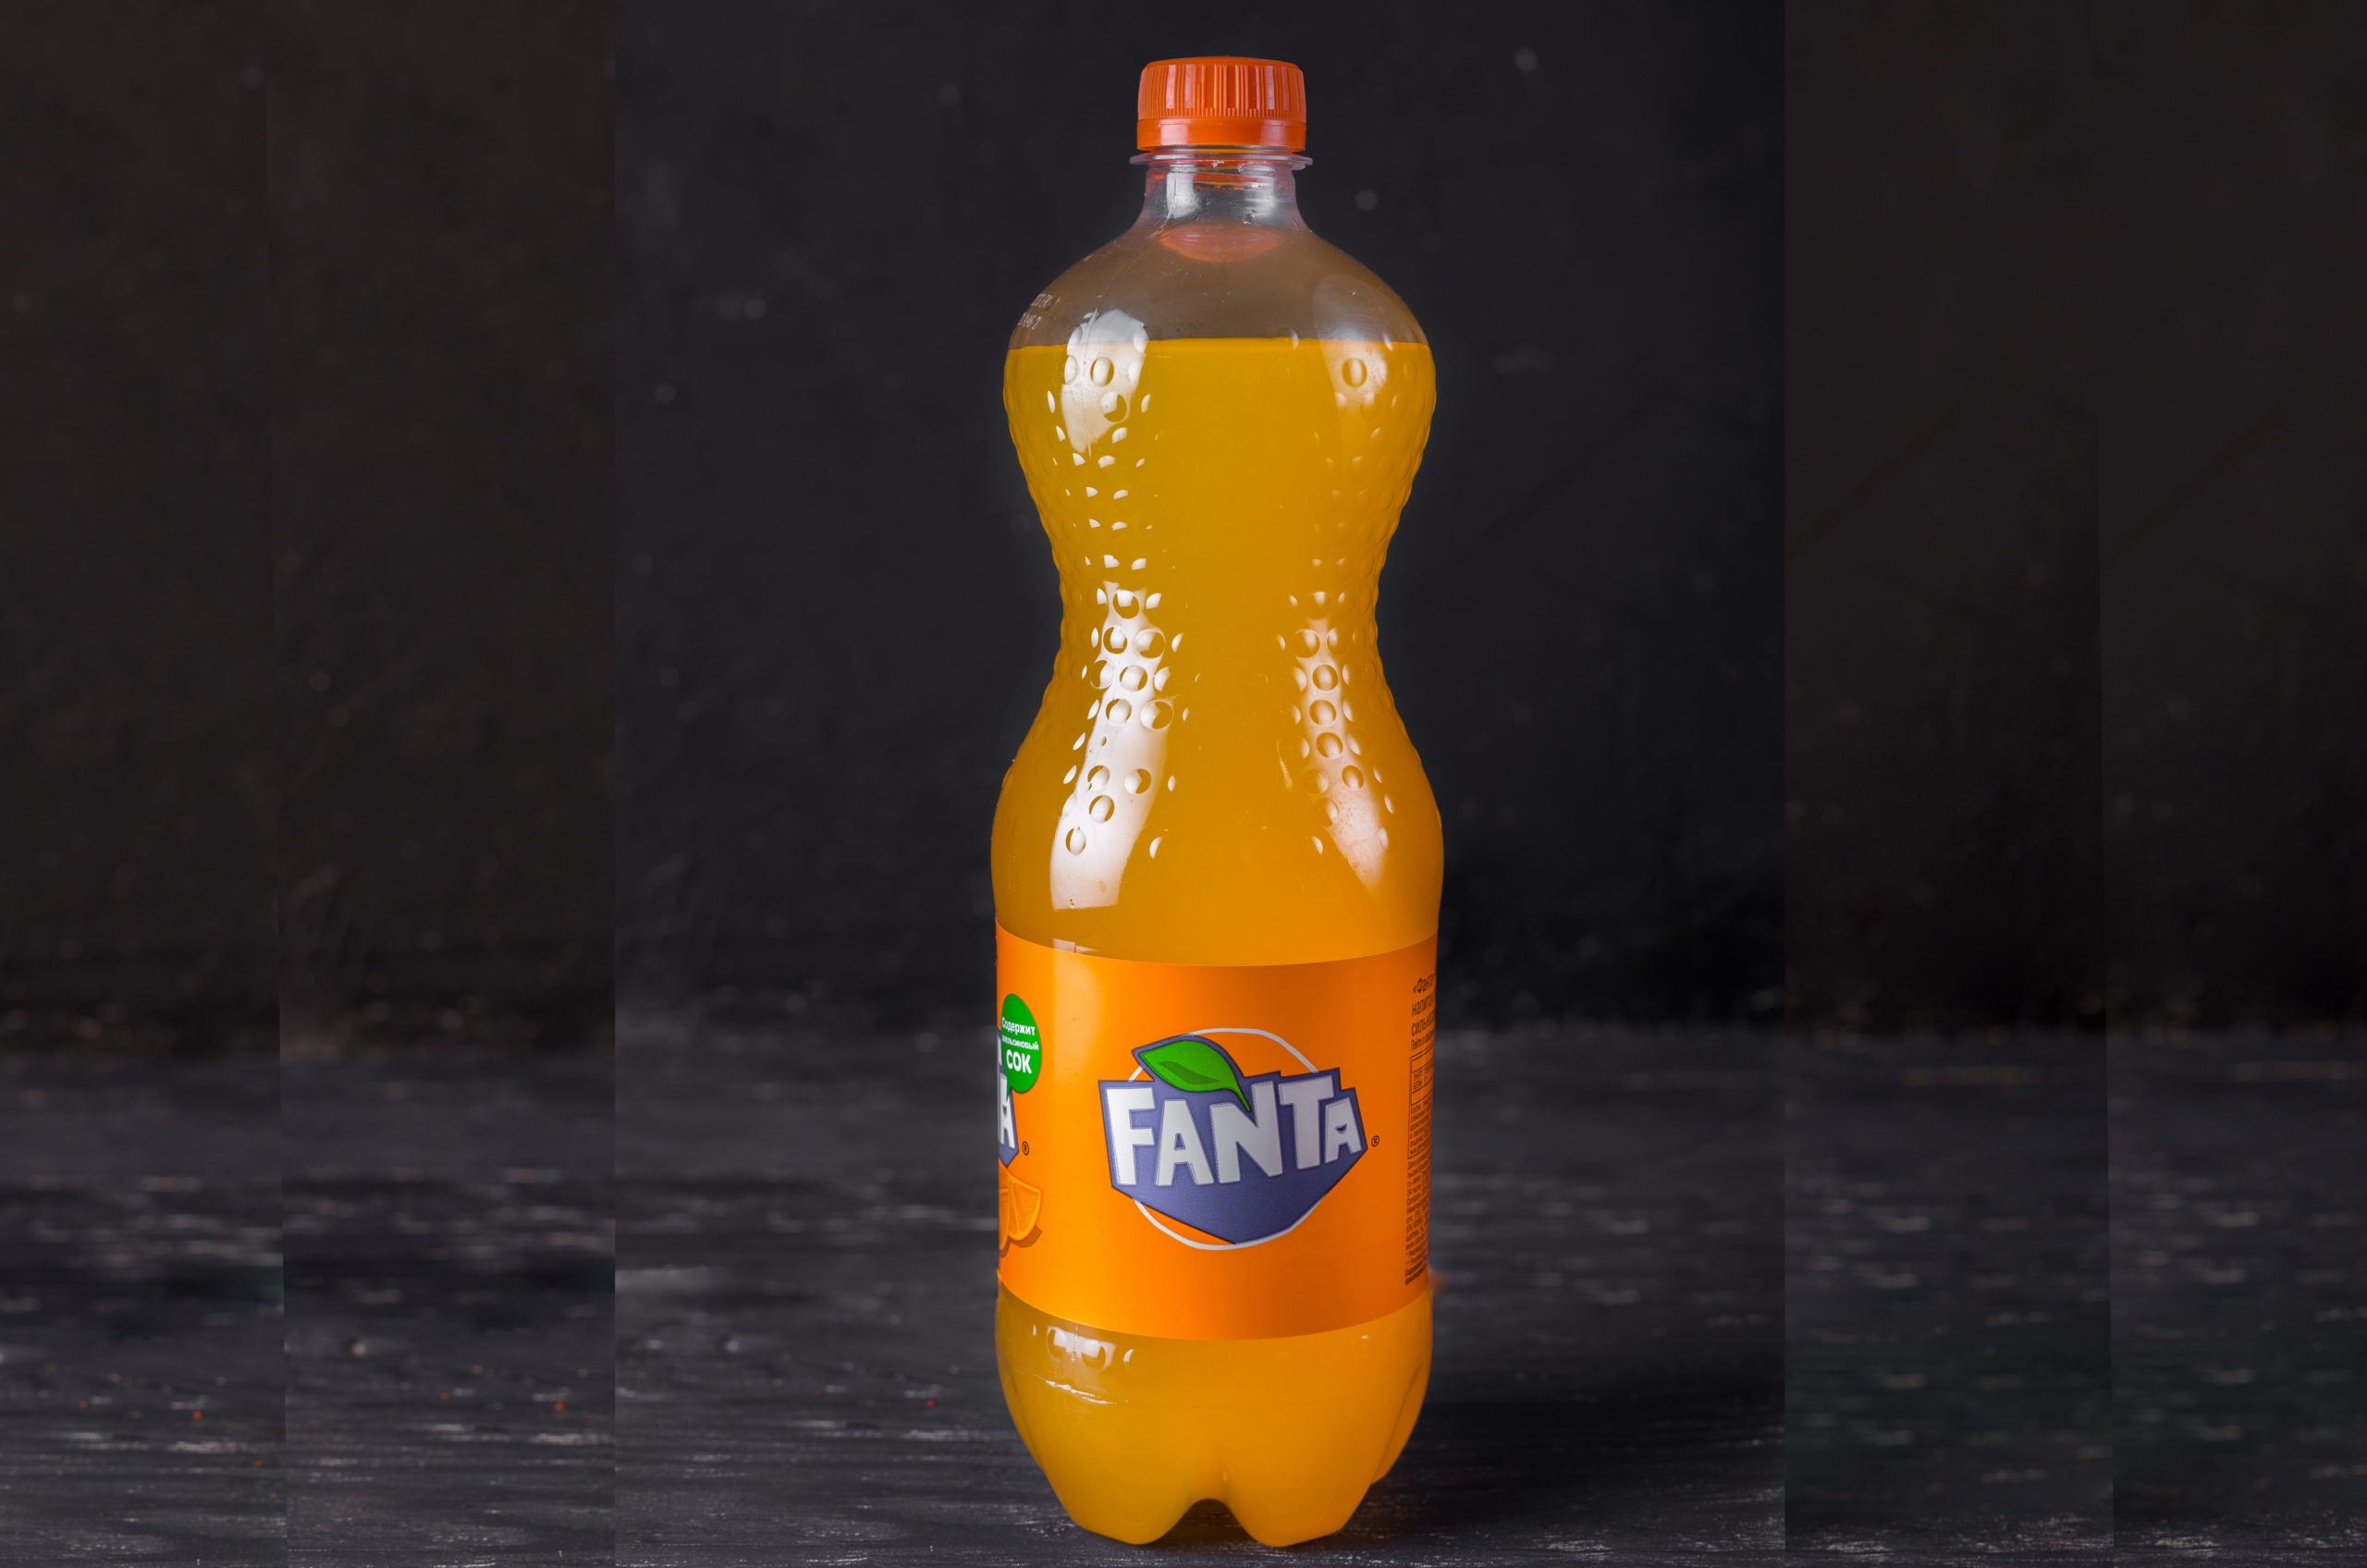 Мандарин в бутылке. Fanta апельсин 0.9л ПЭТ. Fanta апельсин 1 литр. Напиток Фанта апельсин 2л. Fanta апельсин 0.9 л (900 мл).